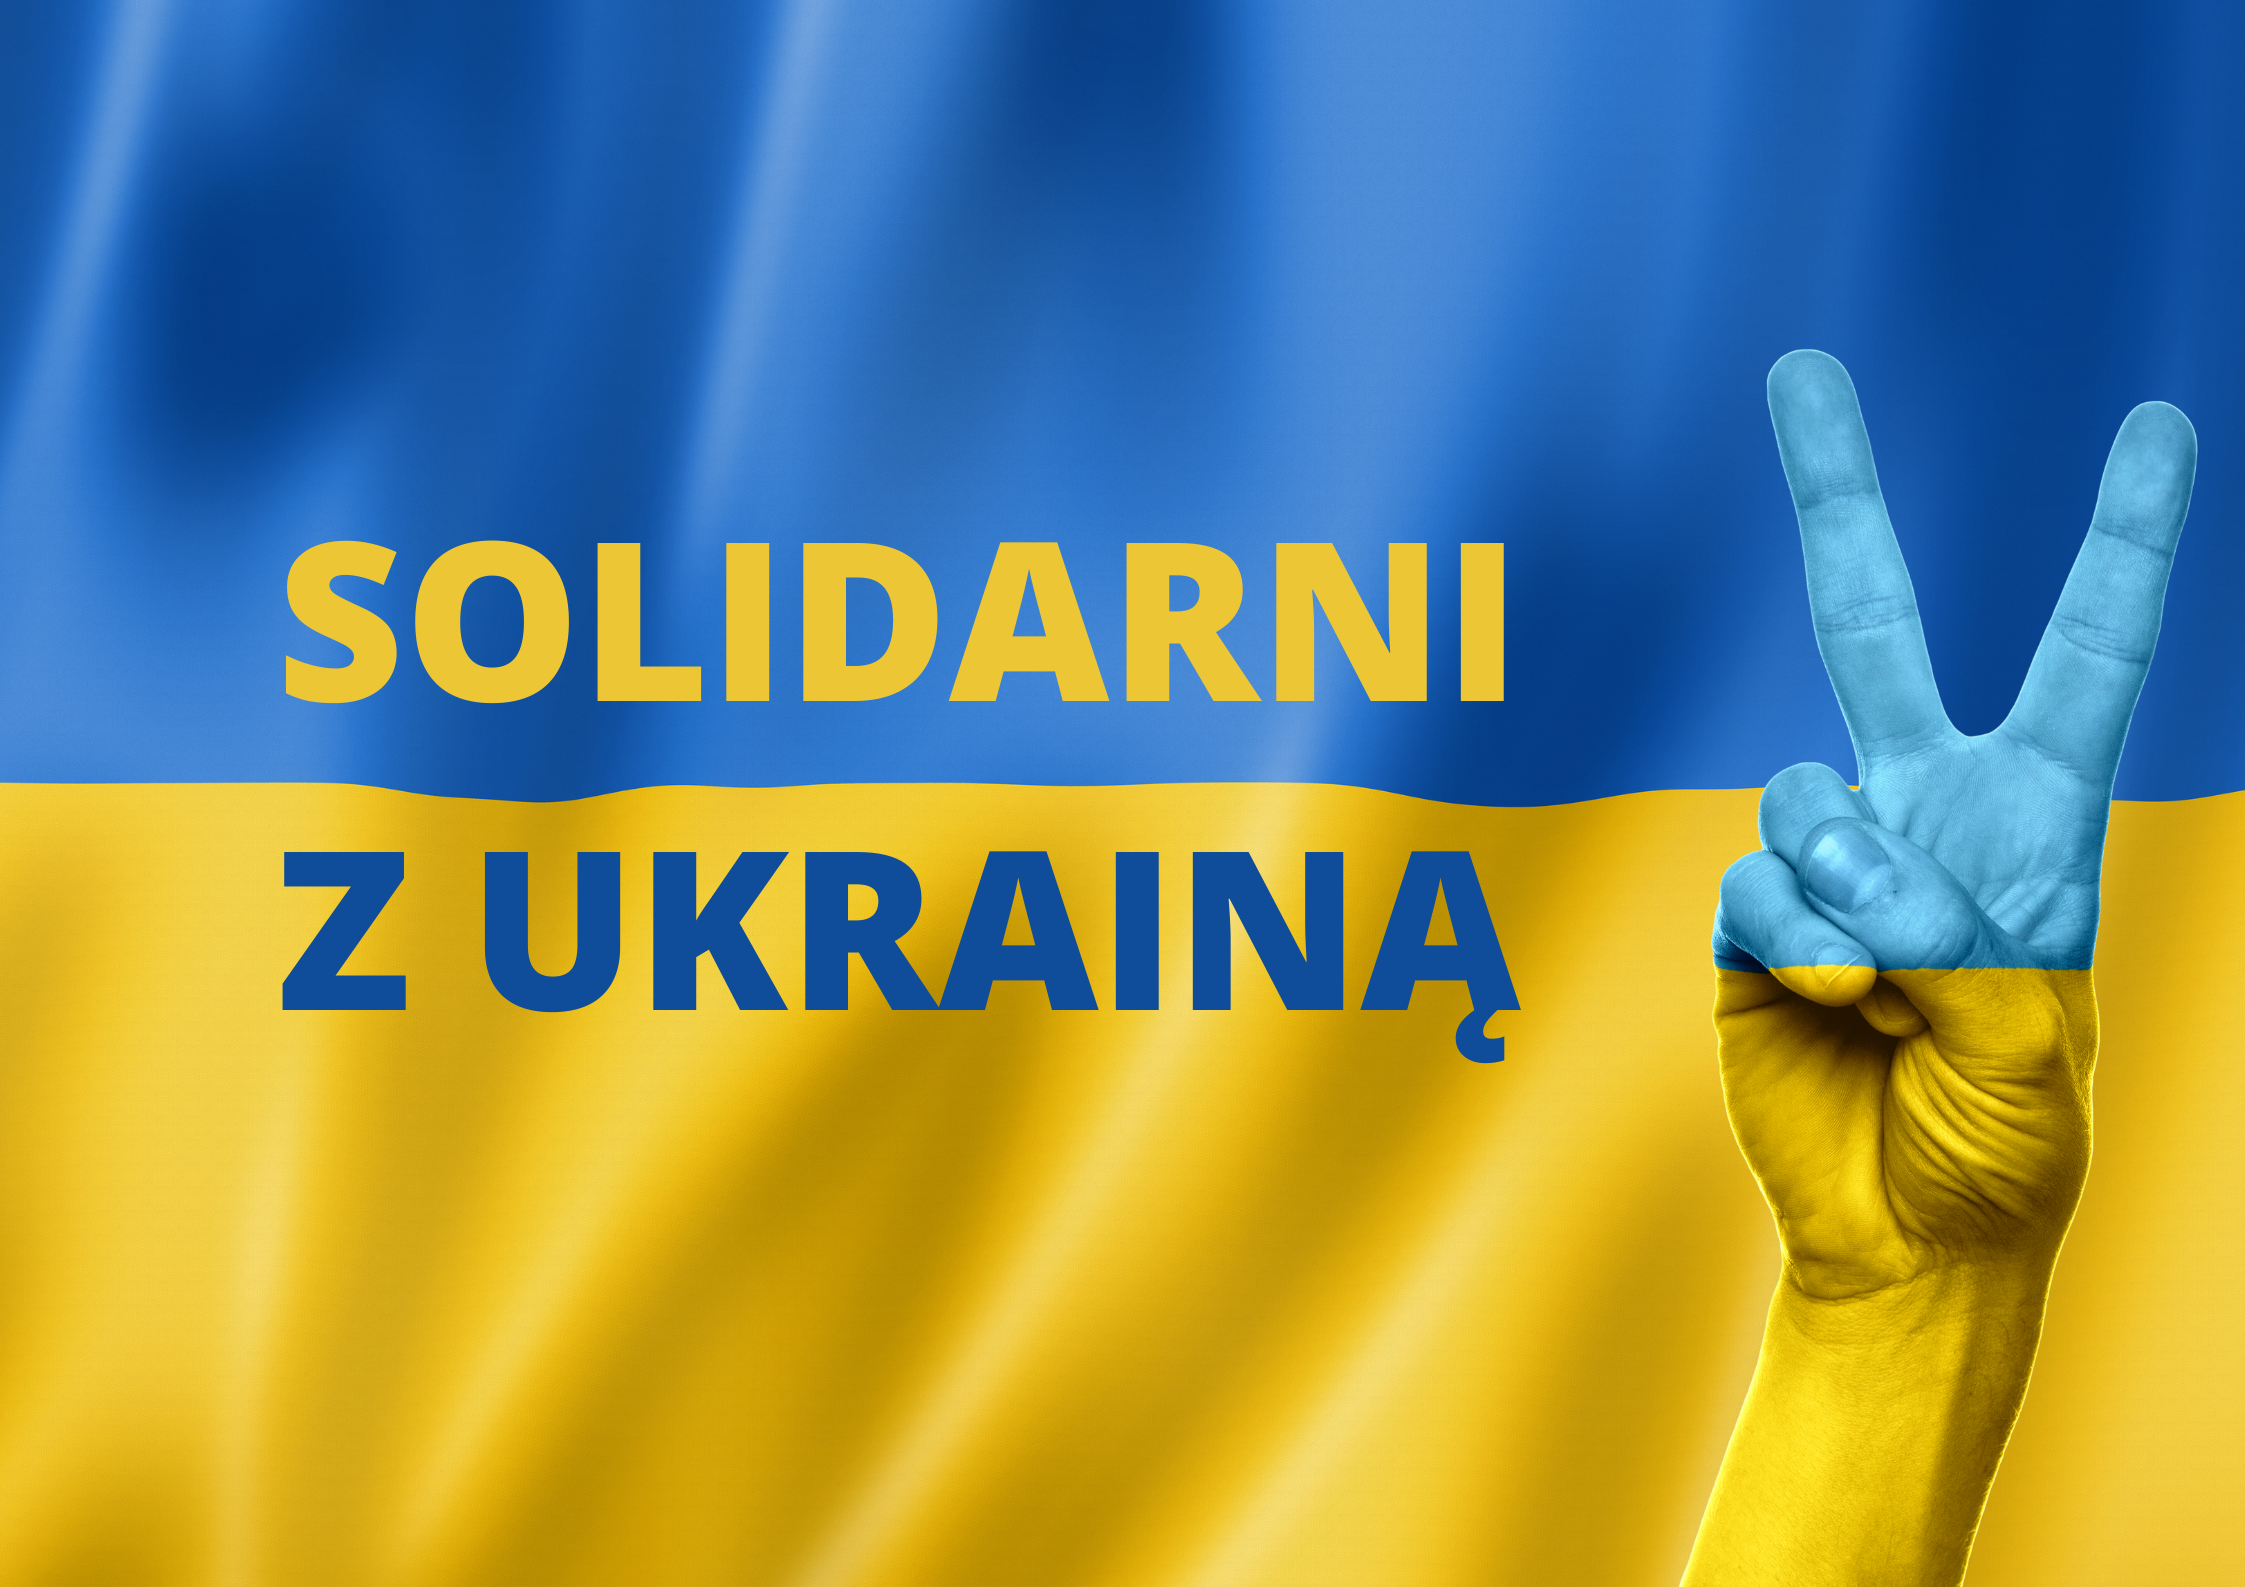 Solidarni z Ukrainą!